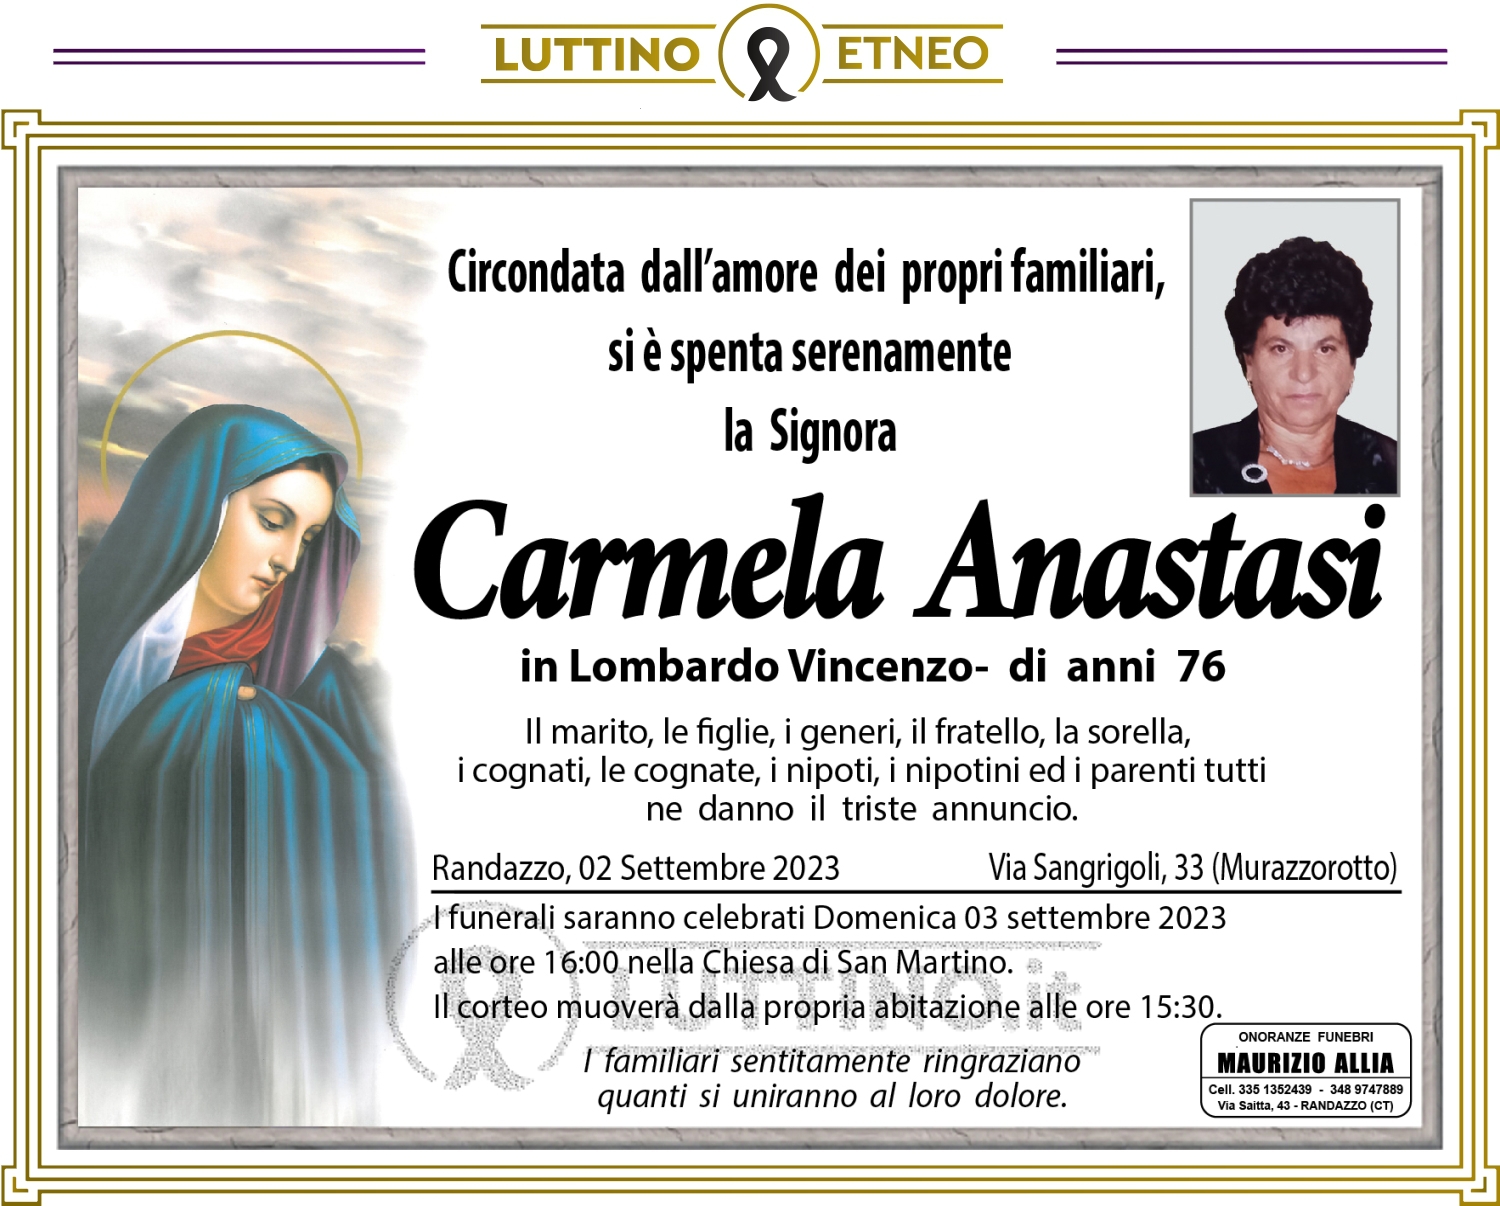 Carmela Anastasi